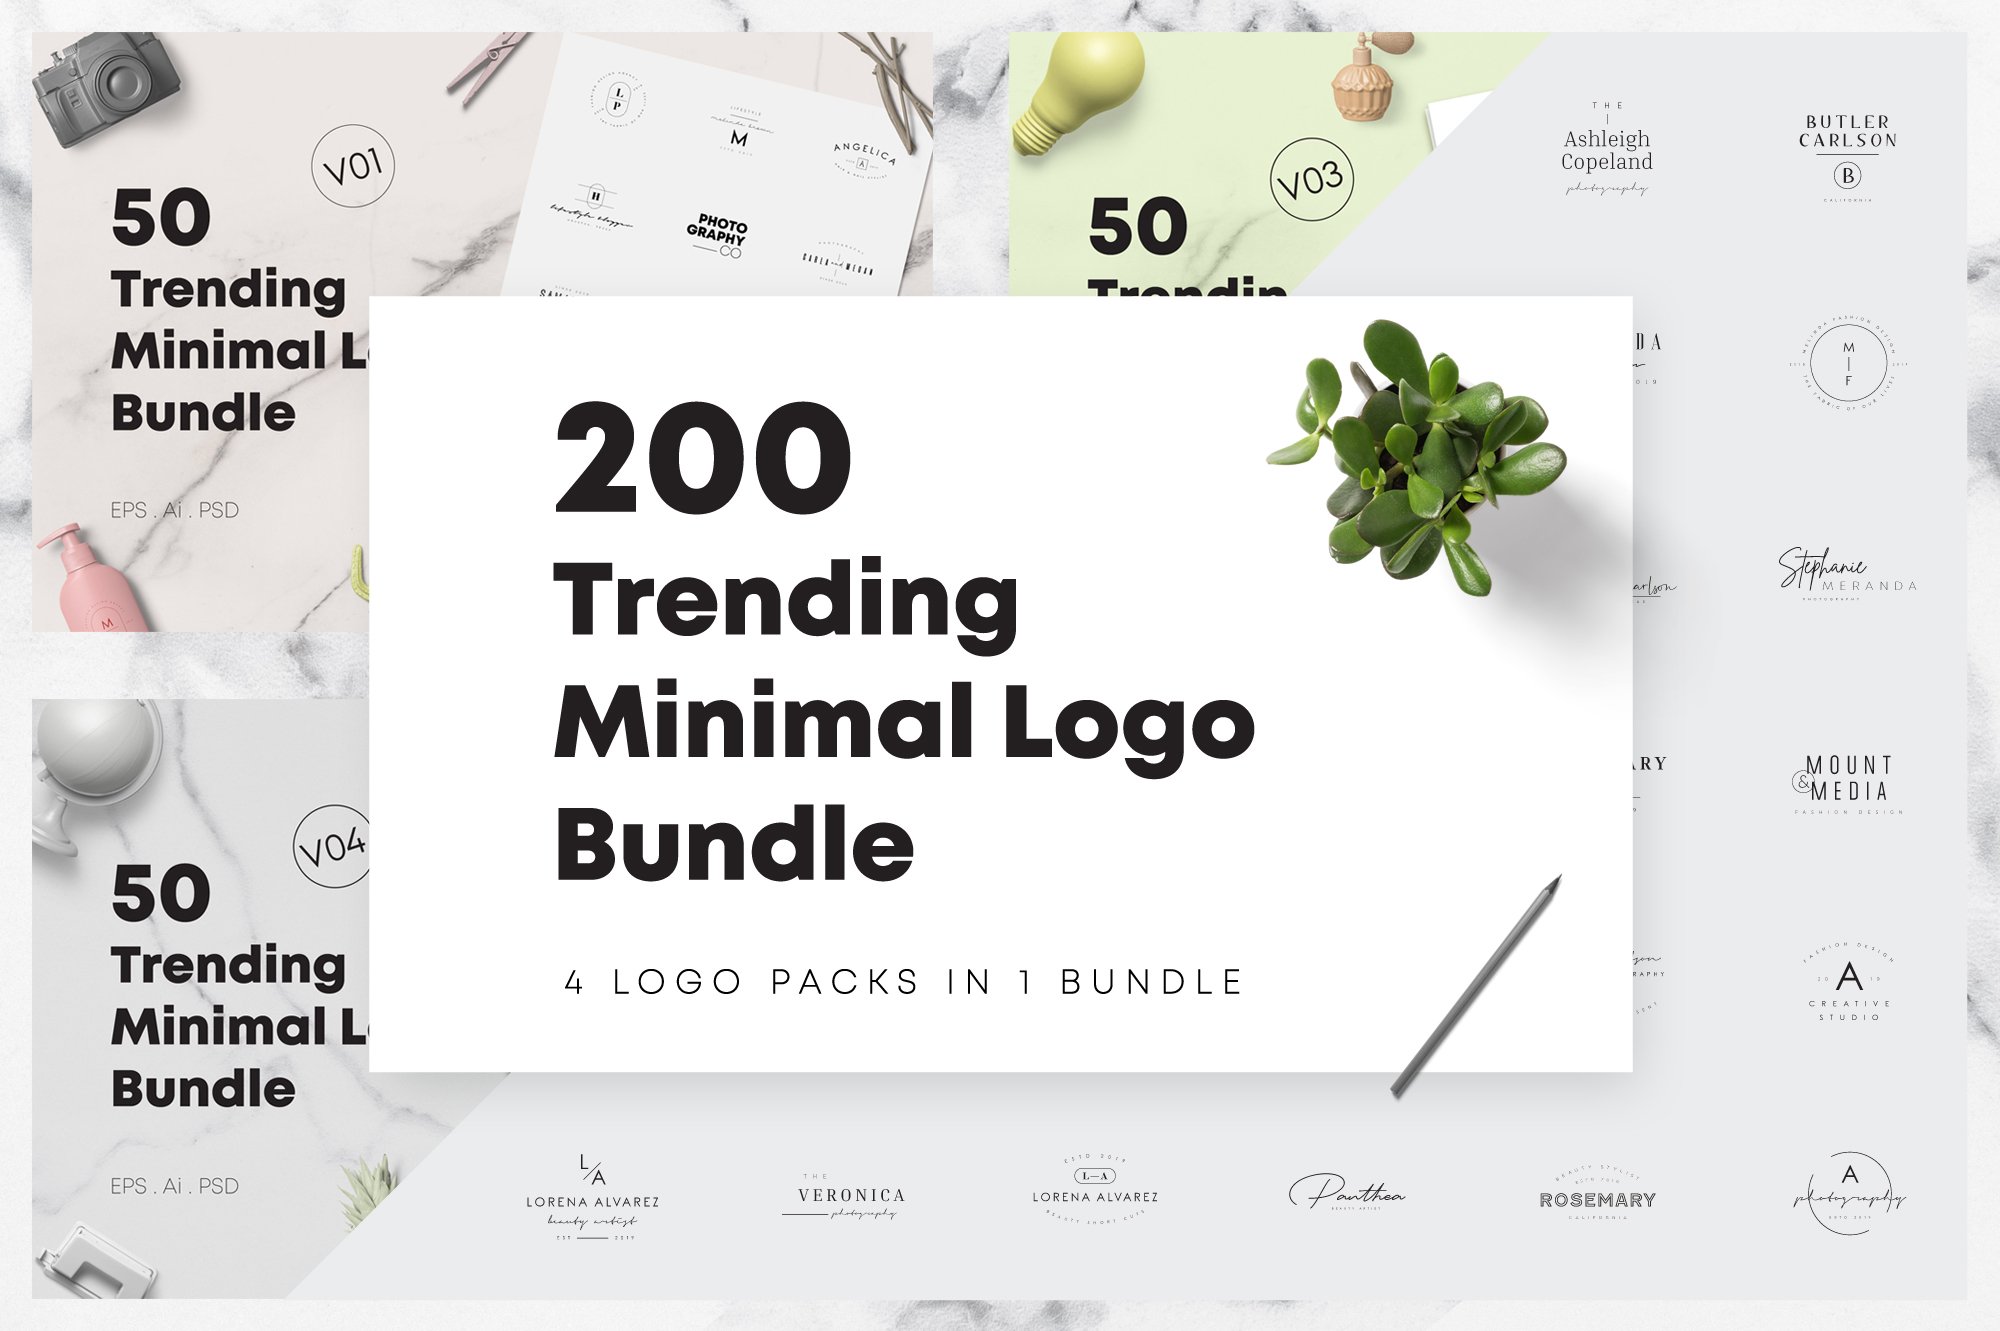 200 Trending Minimal Logo Bundle cover image.